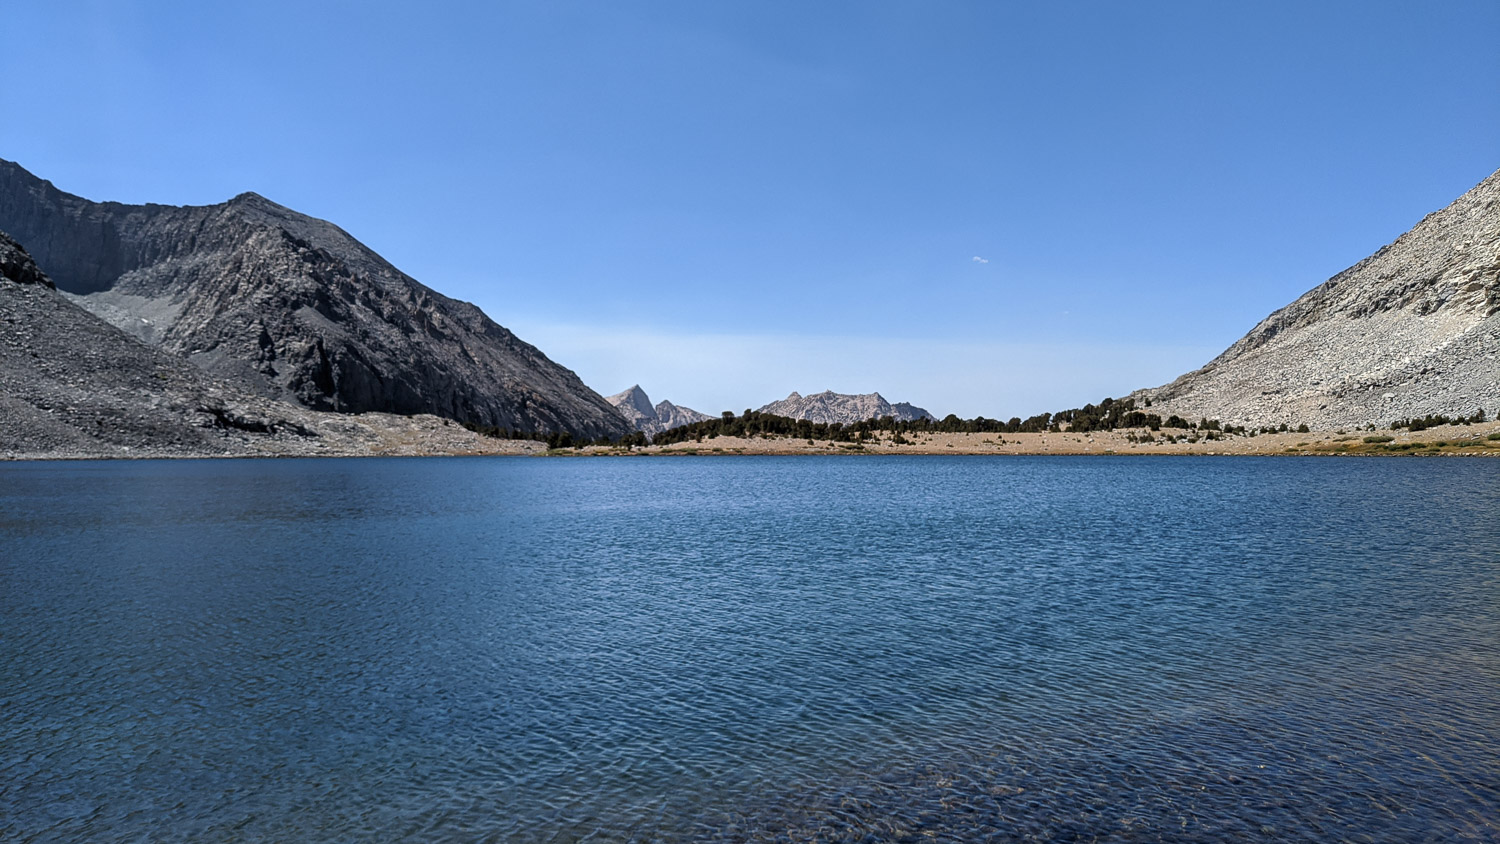 Baxter Lake